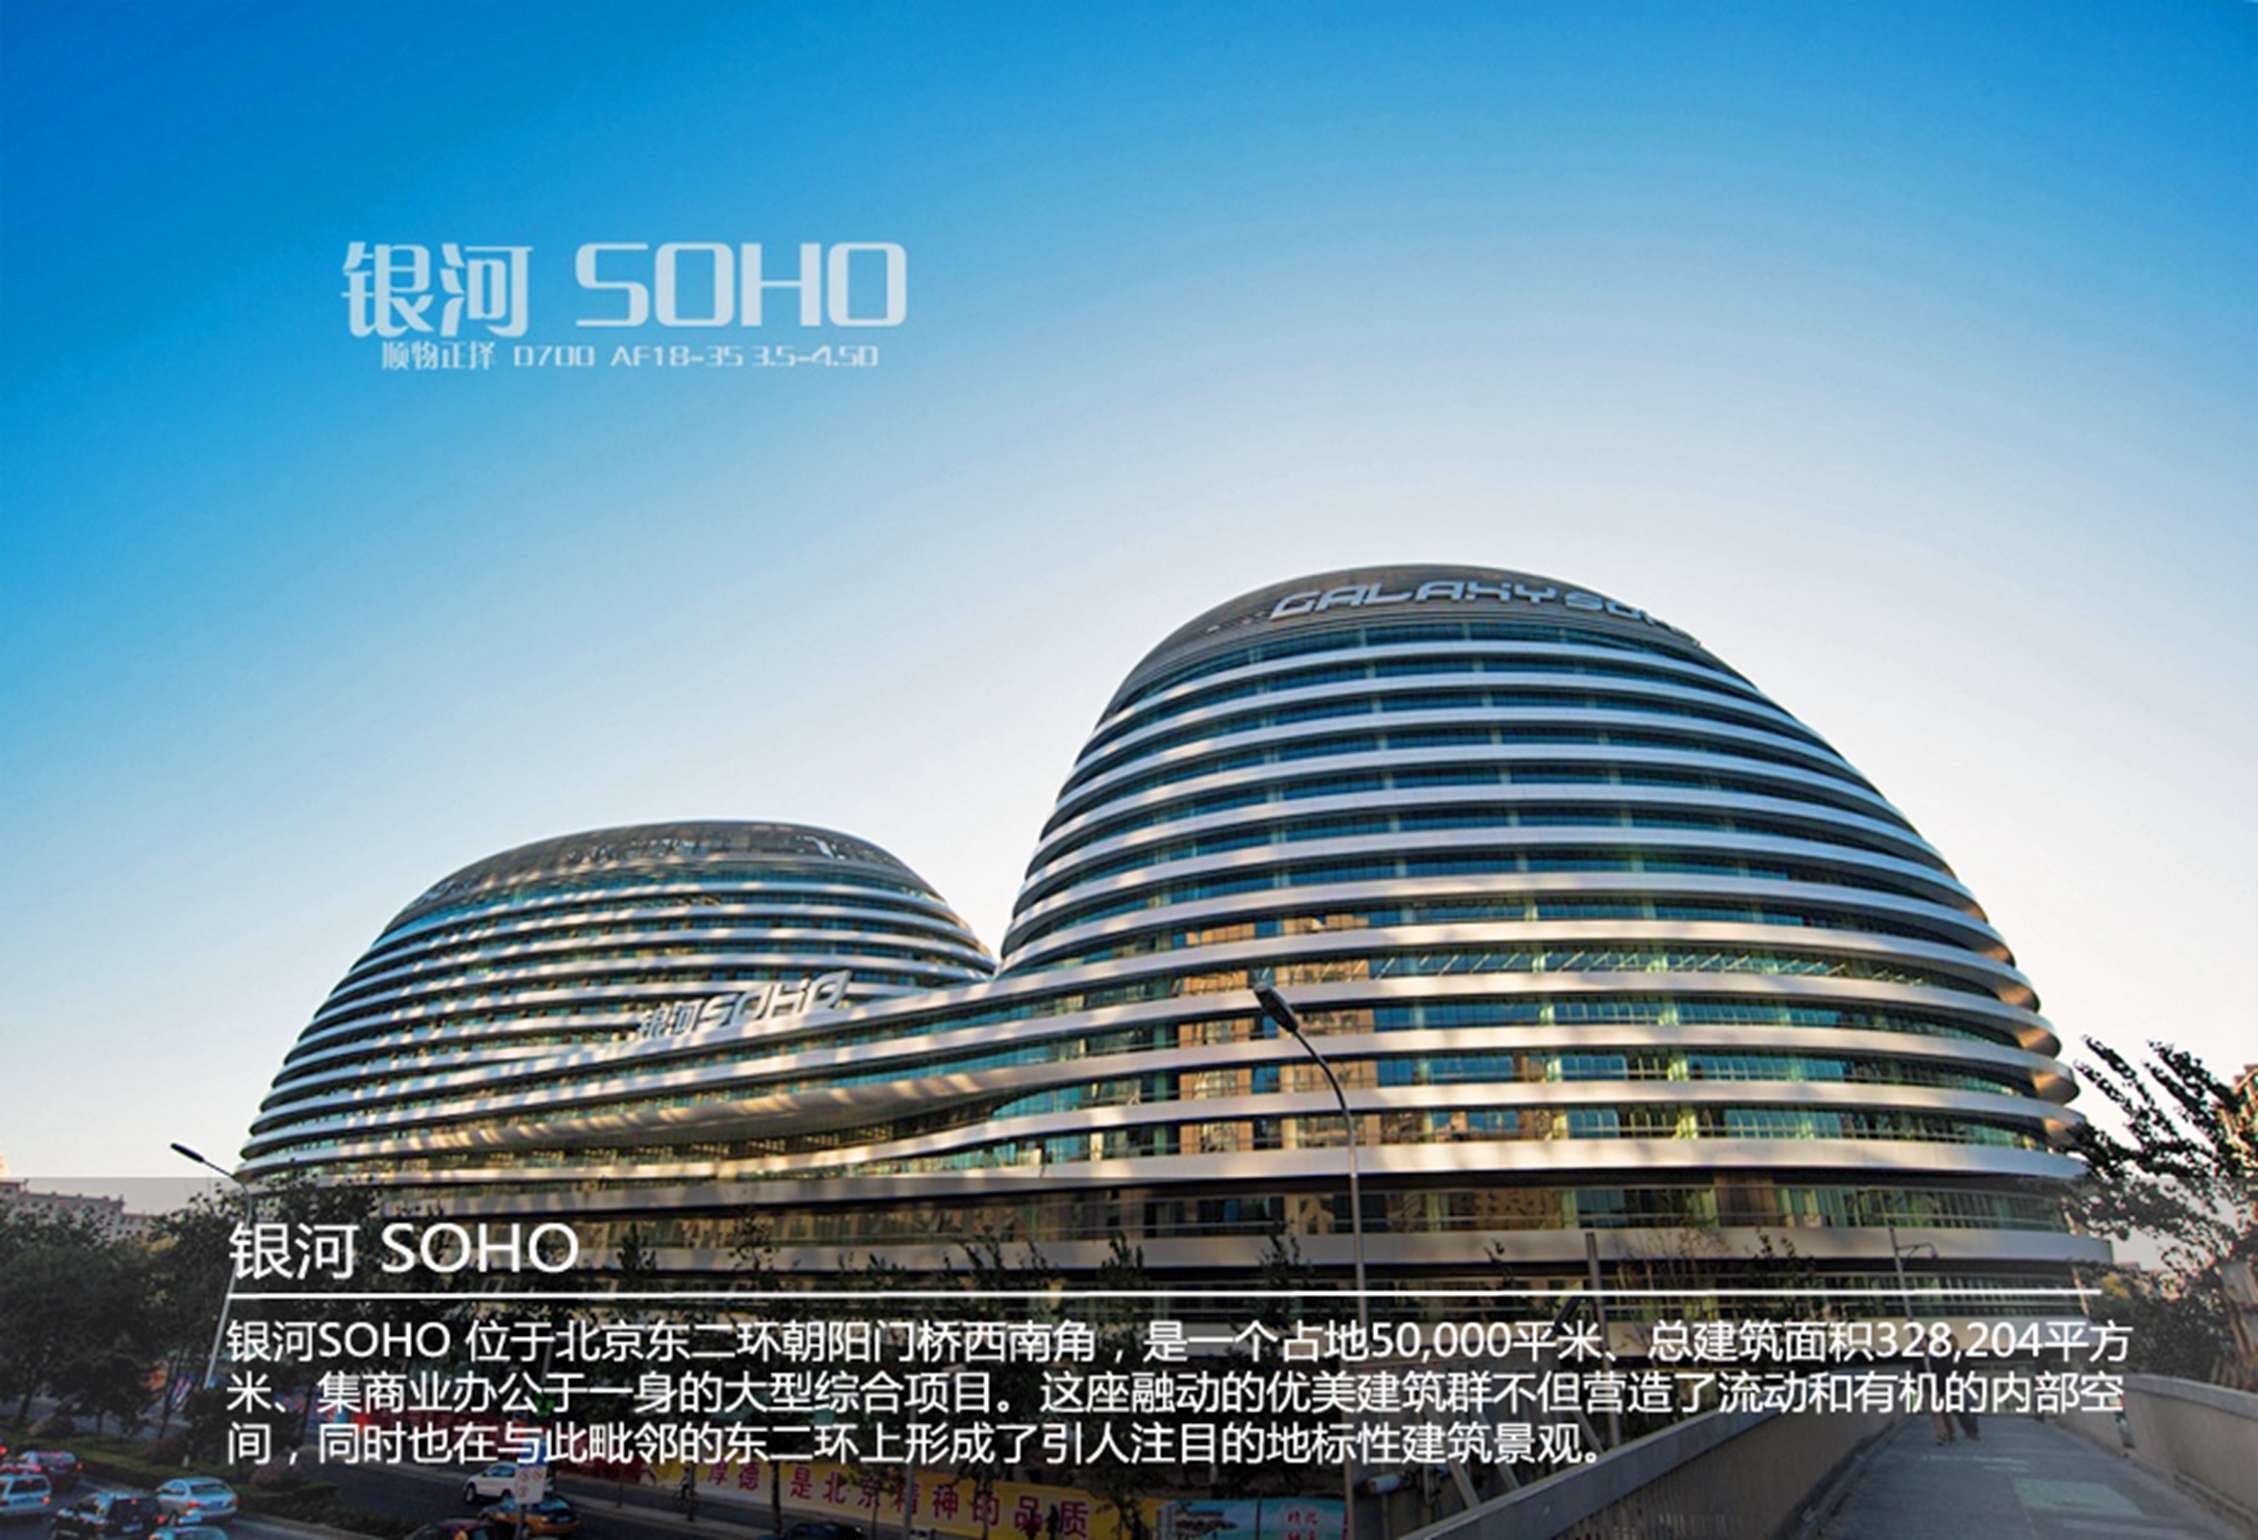 银河SOHO - Moment 建筑摄影